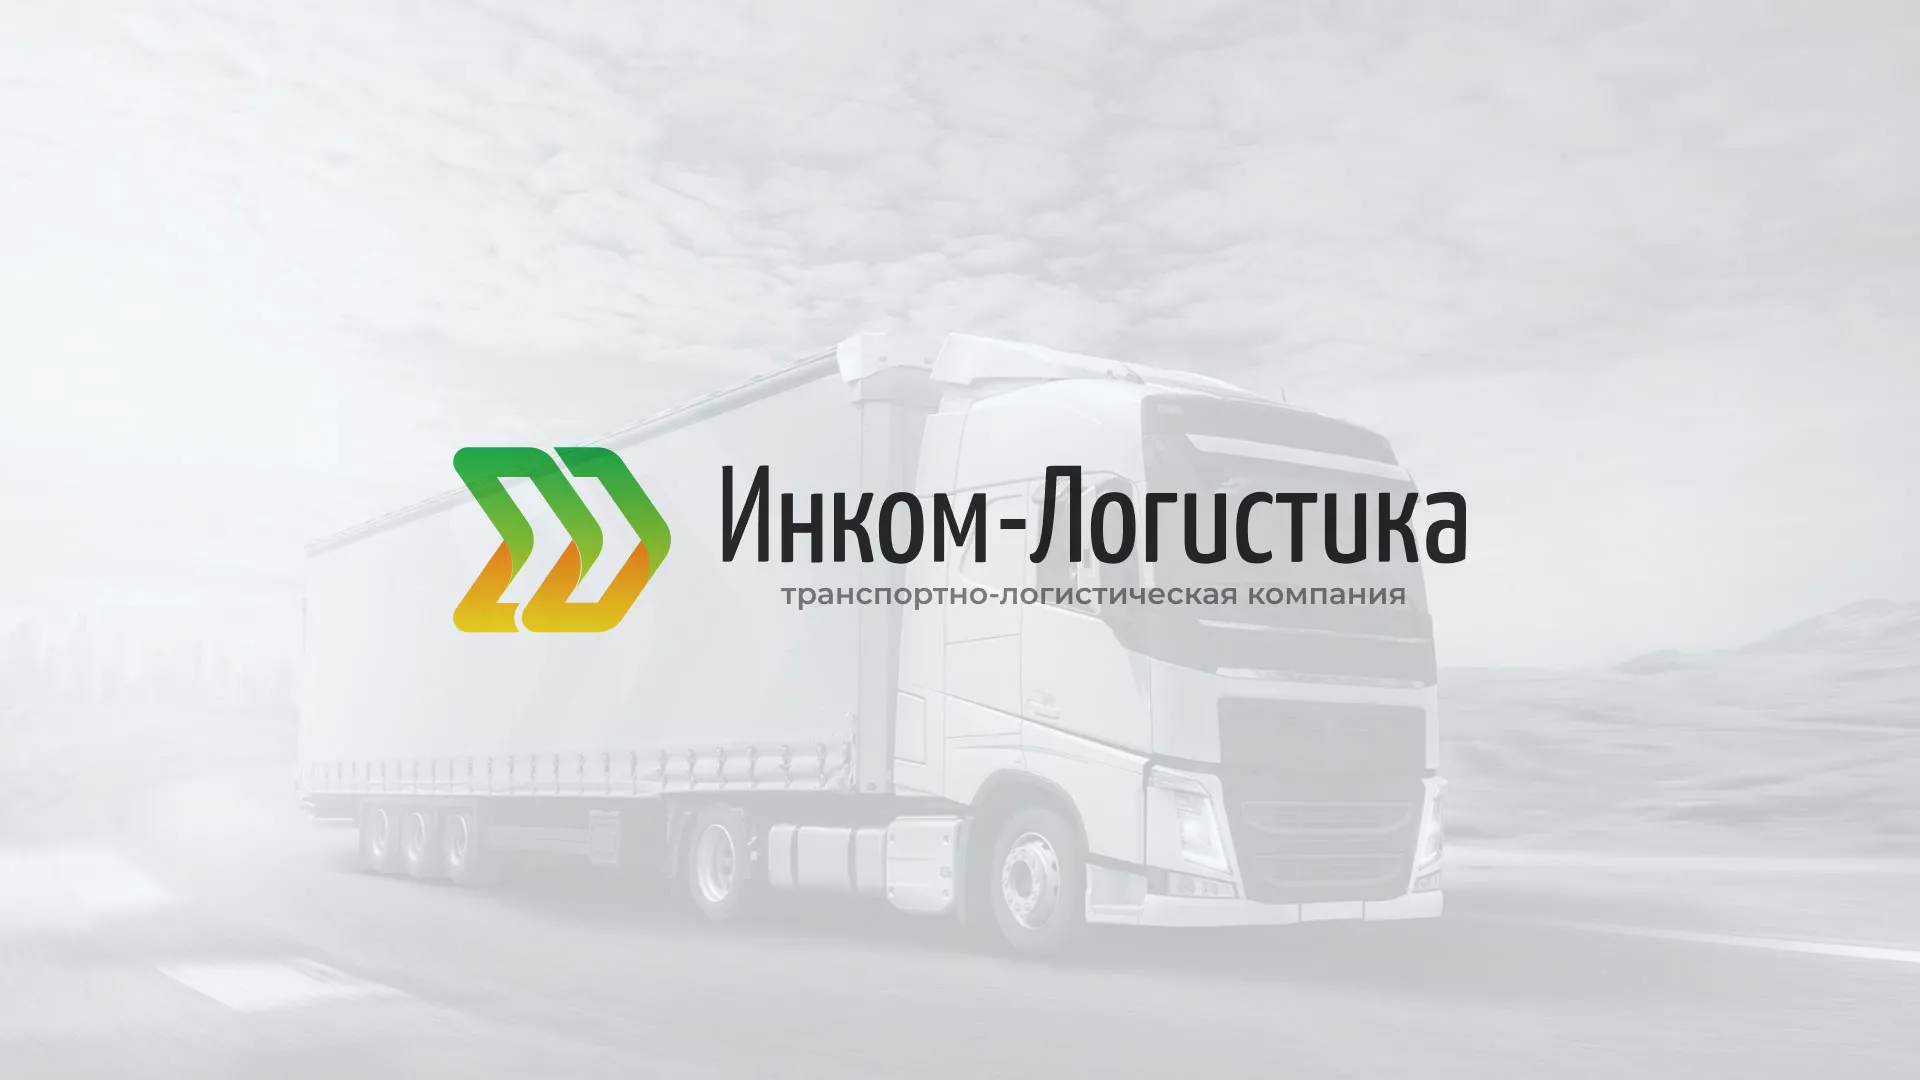 Разработка логотипа и сайта компании «Инком-Логистика» в Магнитогорске